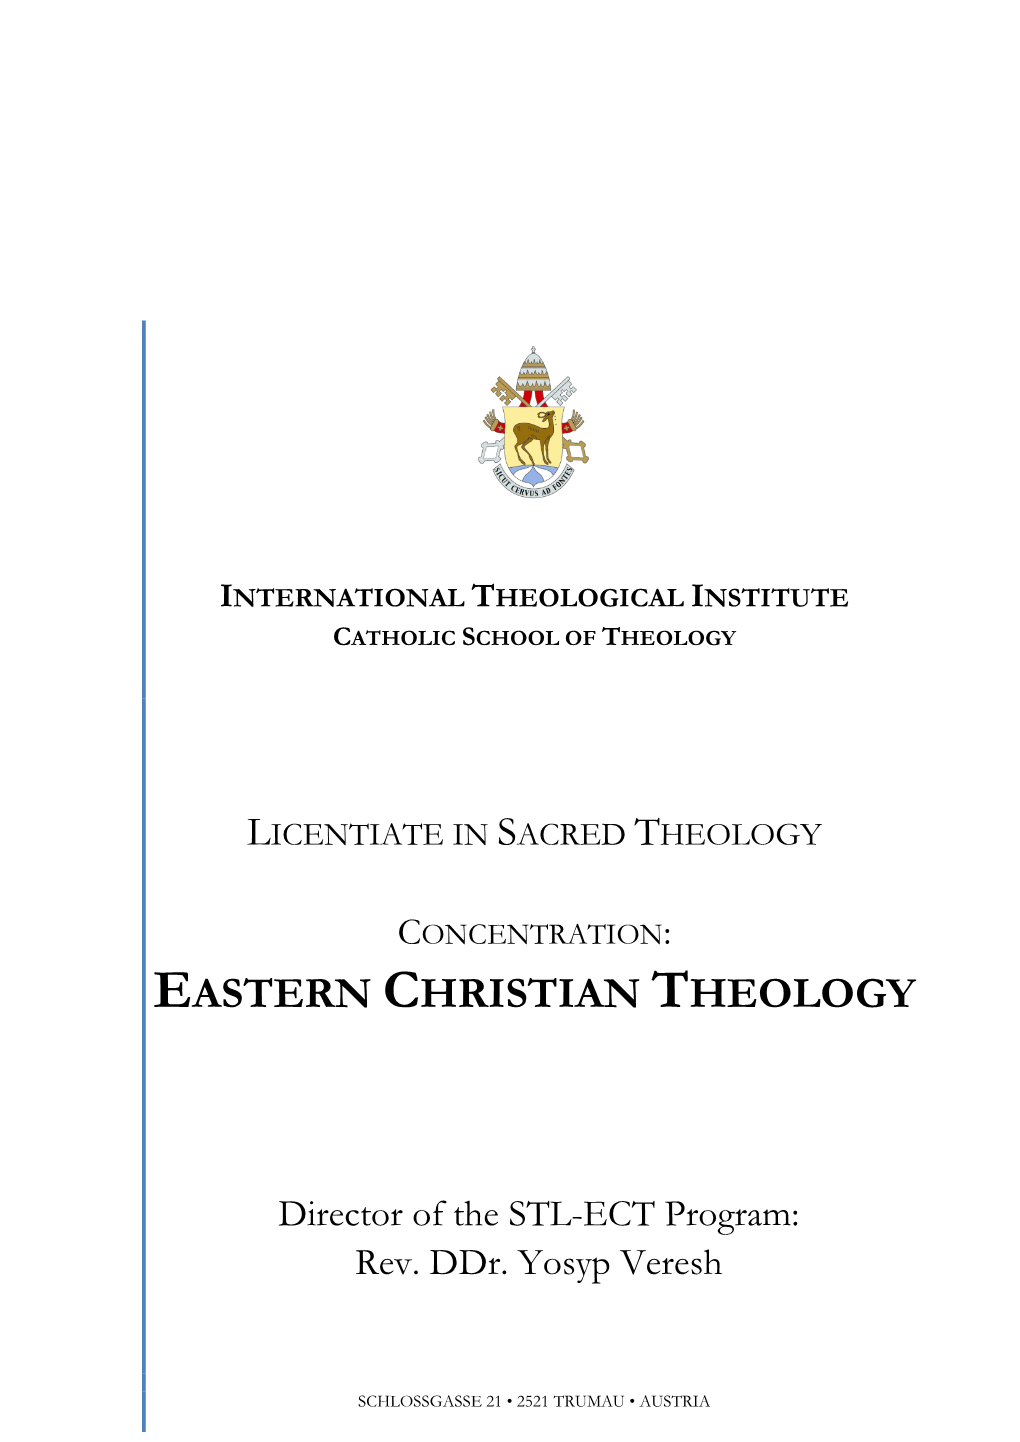 Eastern Christian Theology